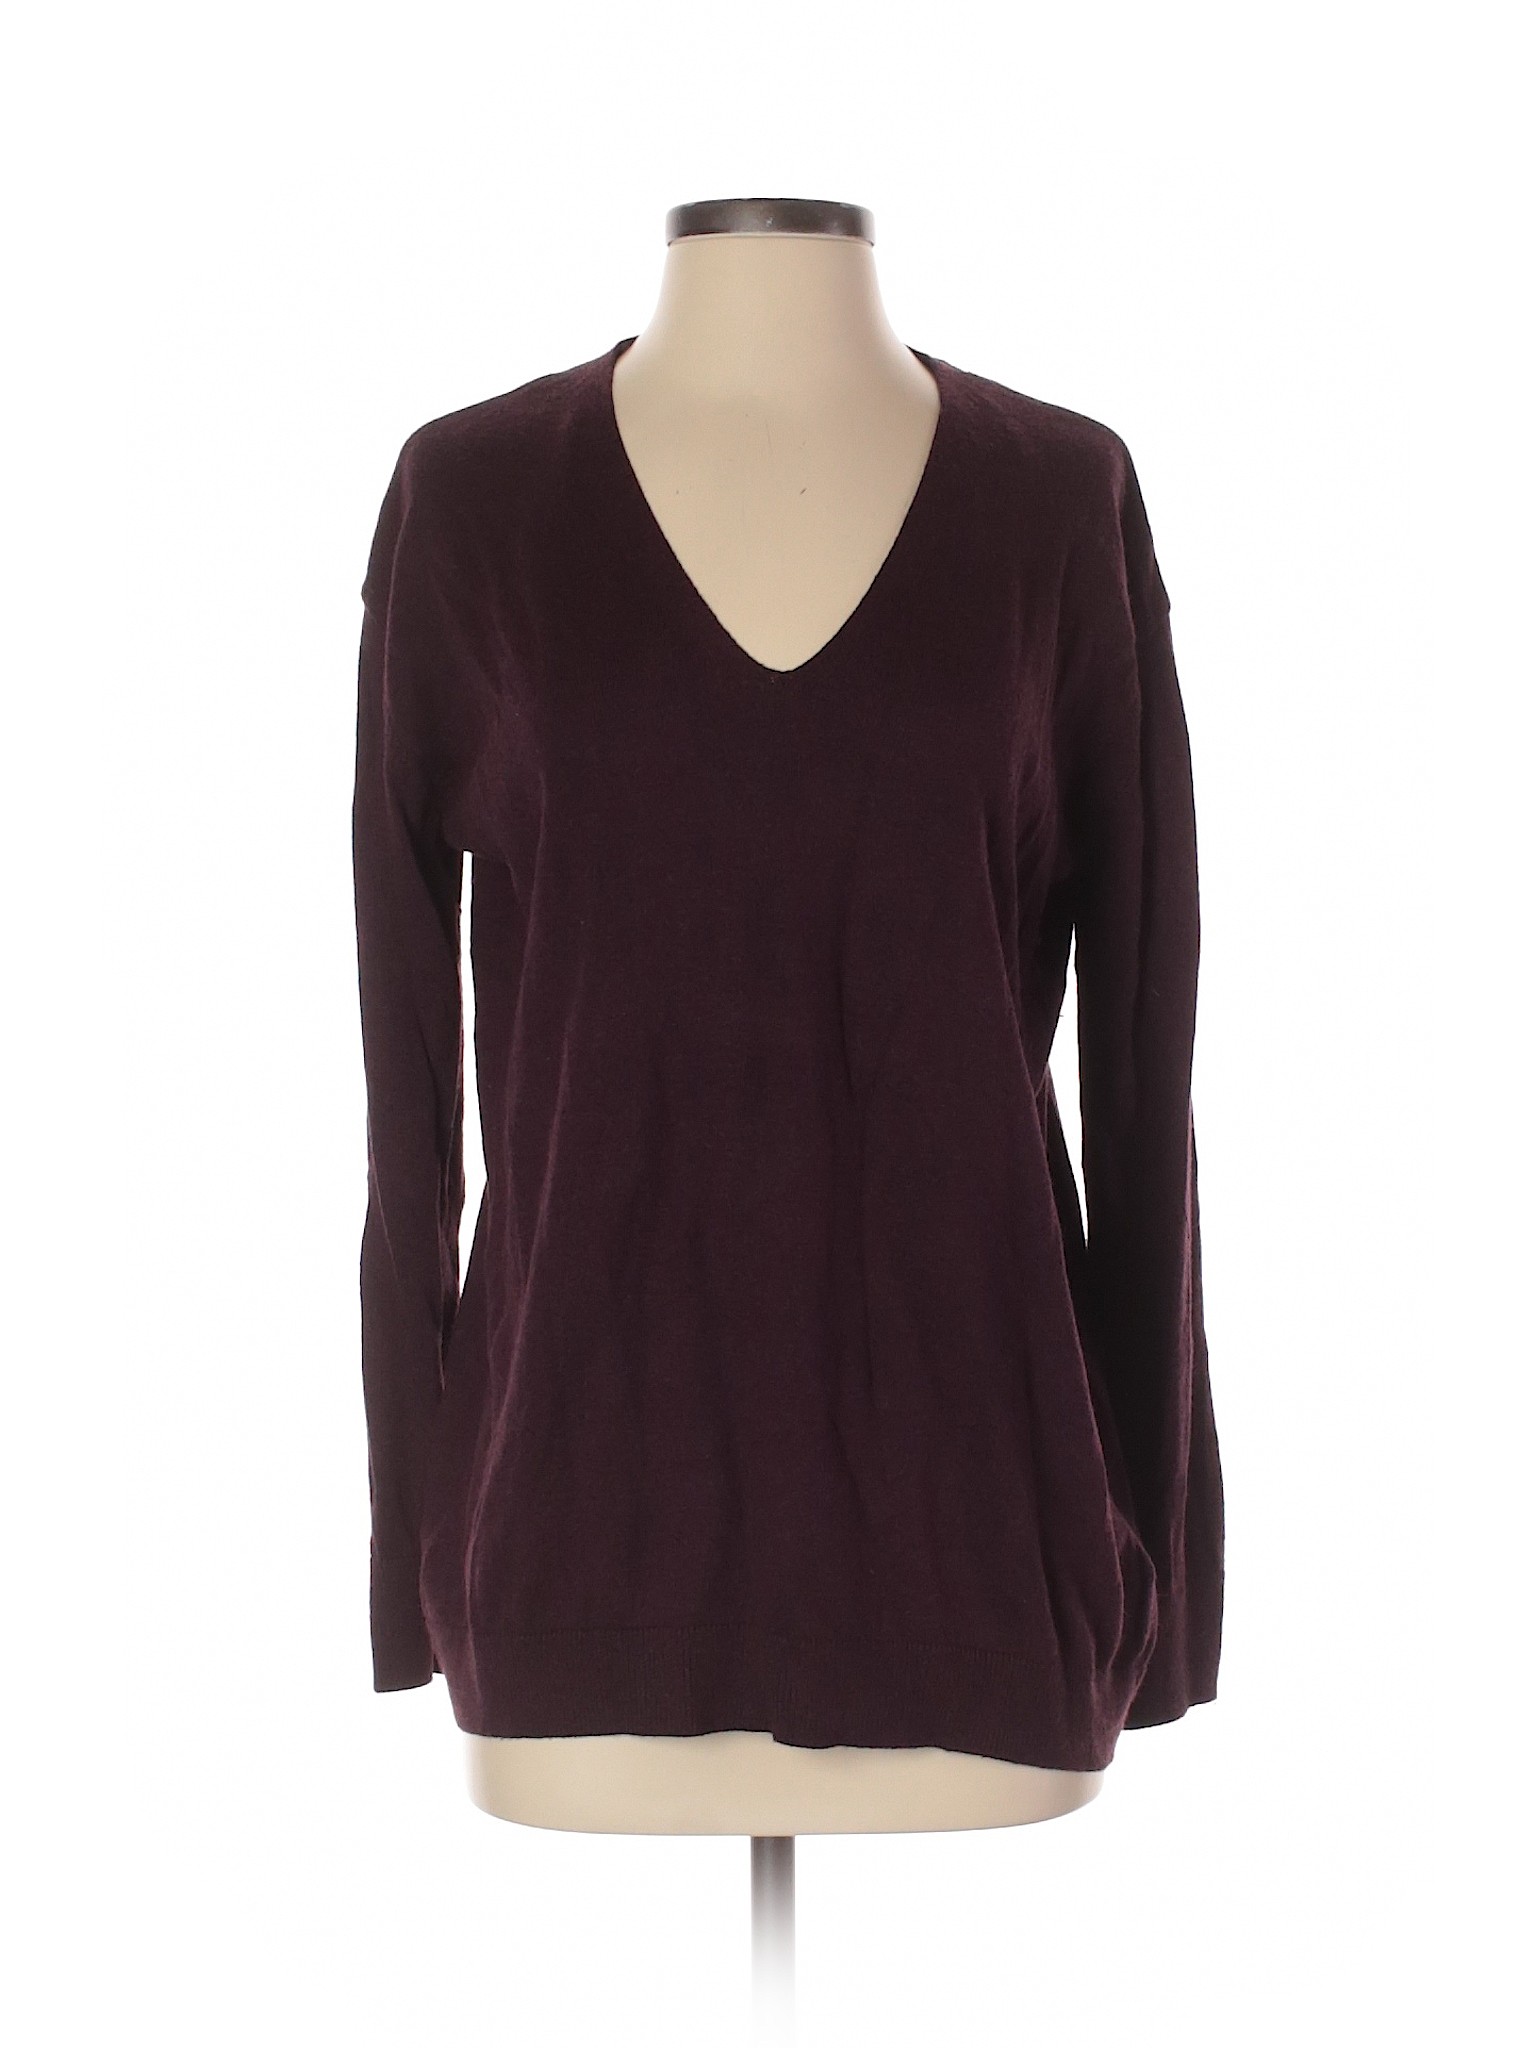 H&M Women Purple Pullover Sweater S | eBay